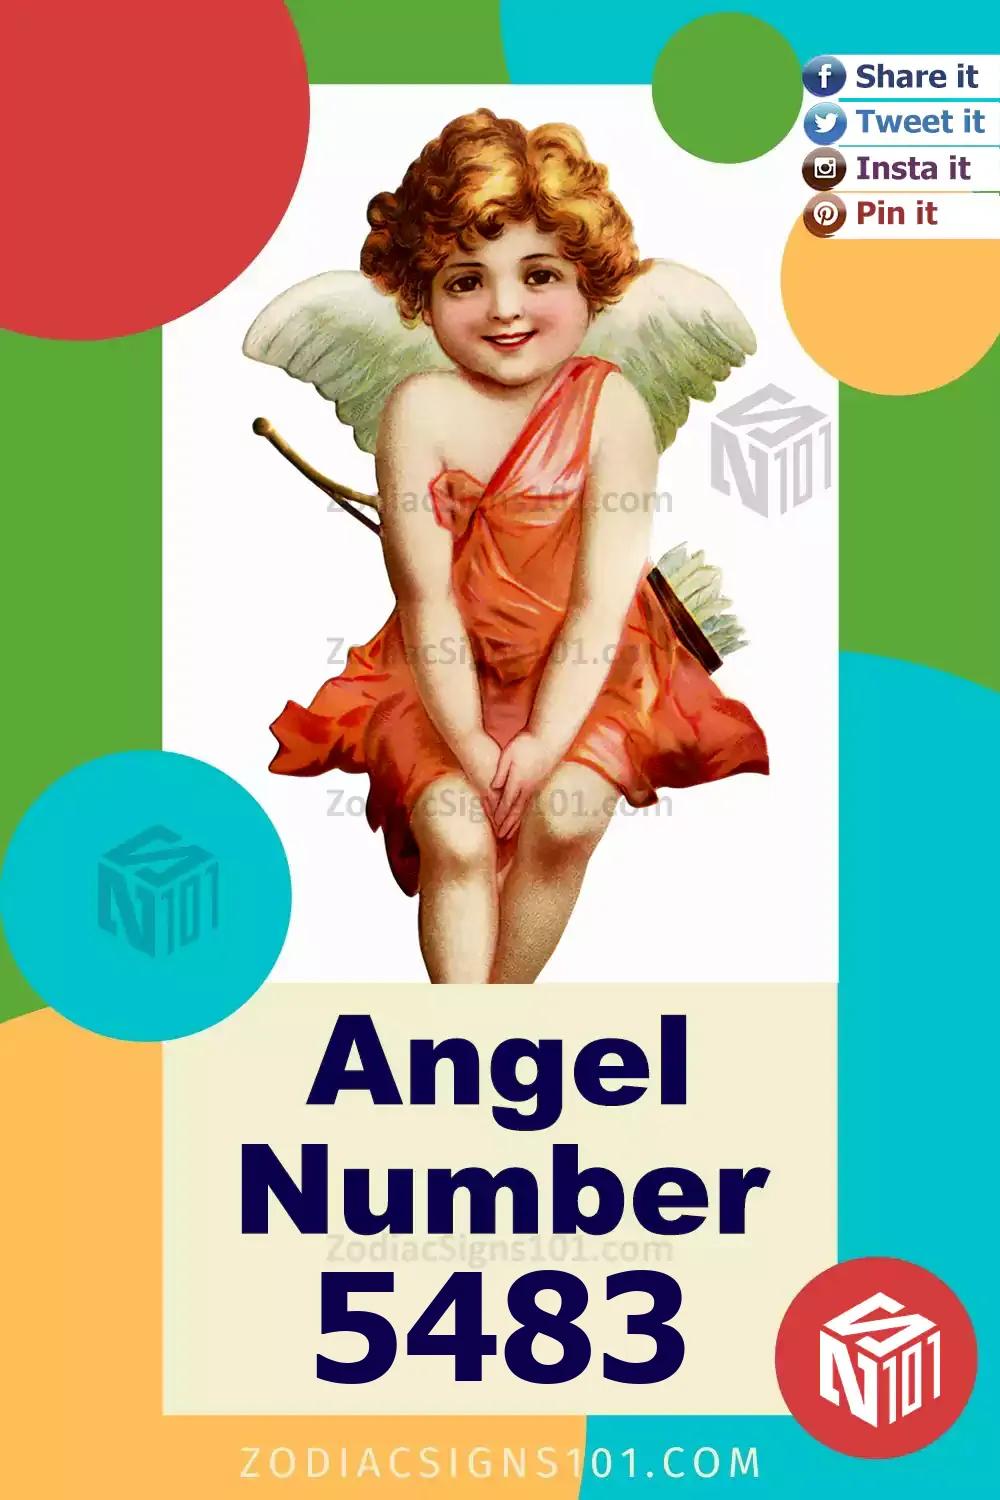 5483-Angel-Number-Meaning.jpg